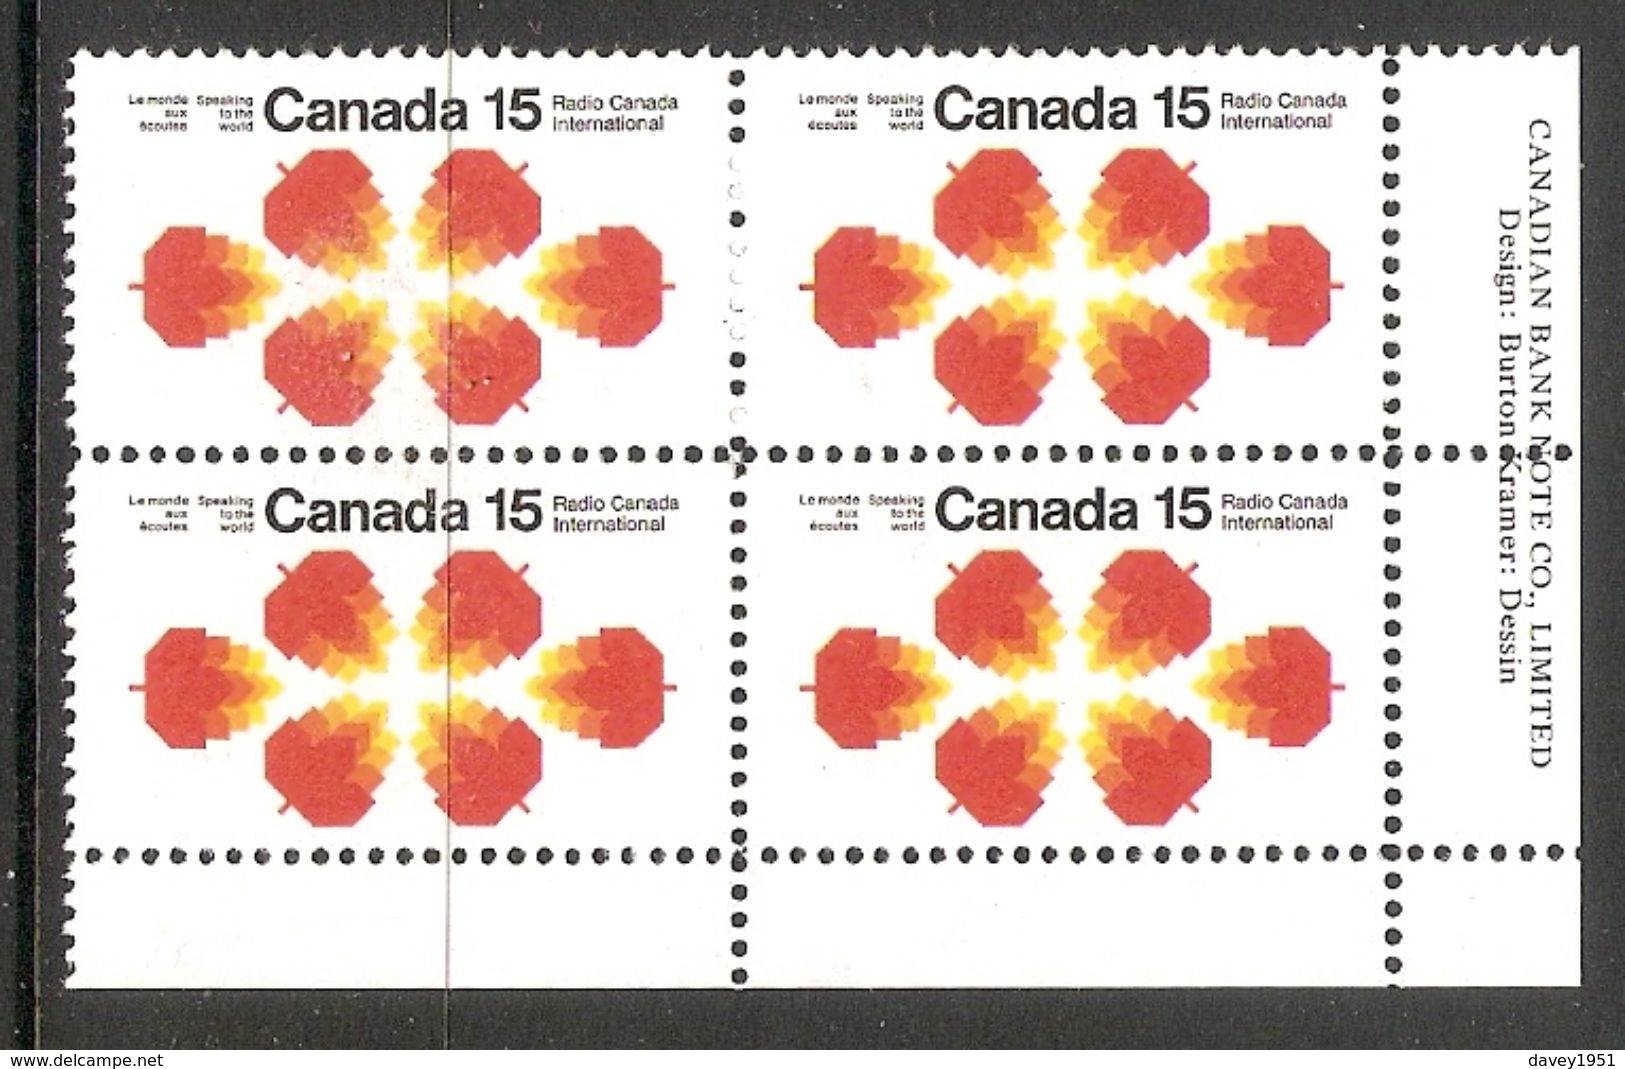 006311 Canada 1971 Radio 15c Plate Block LR MNH - Plate Number & Inscriptions